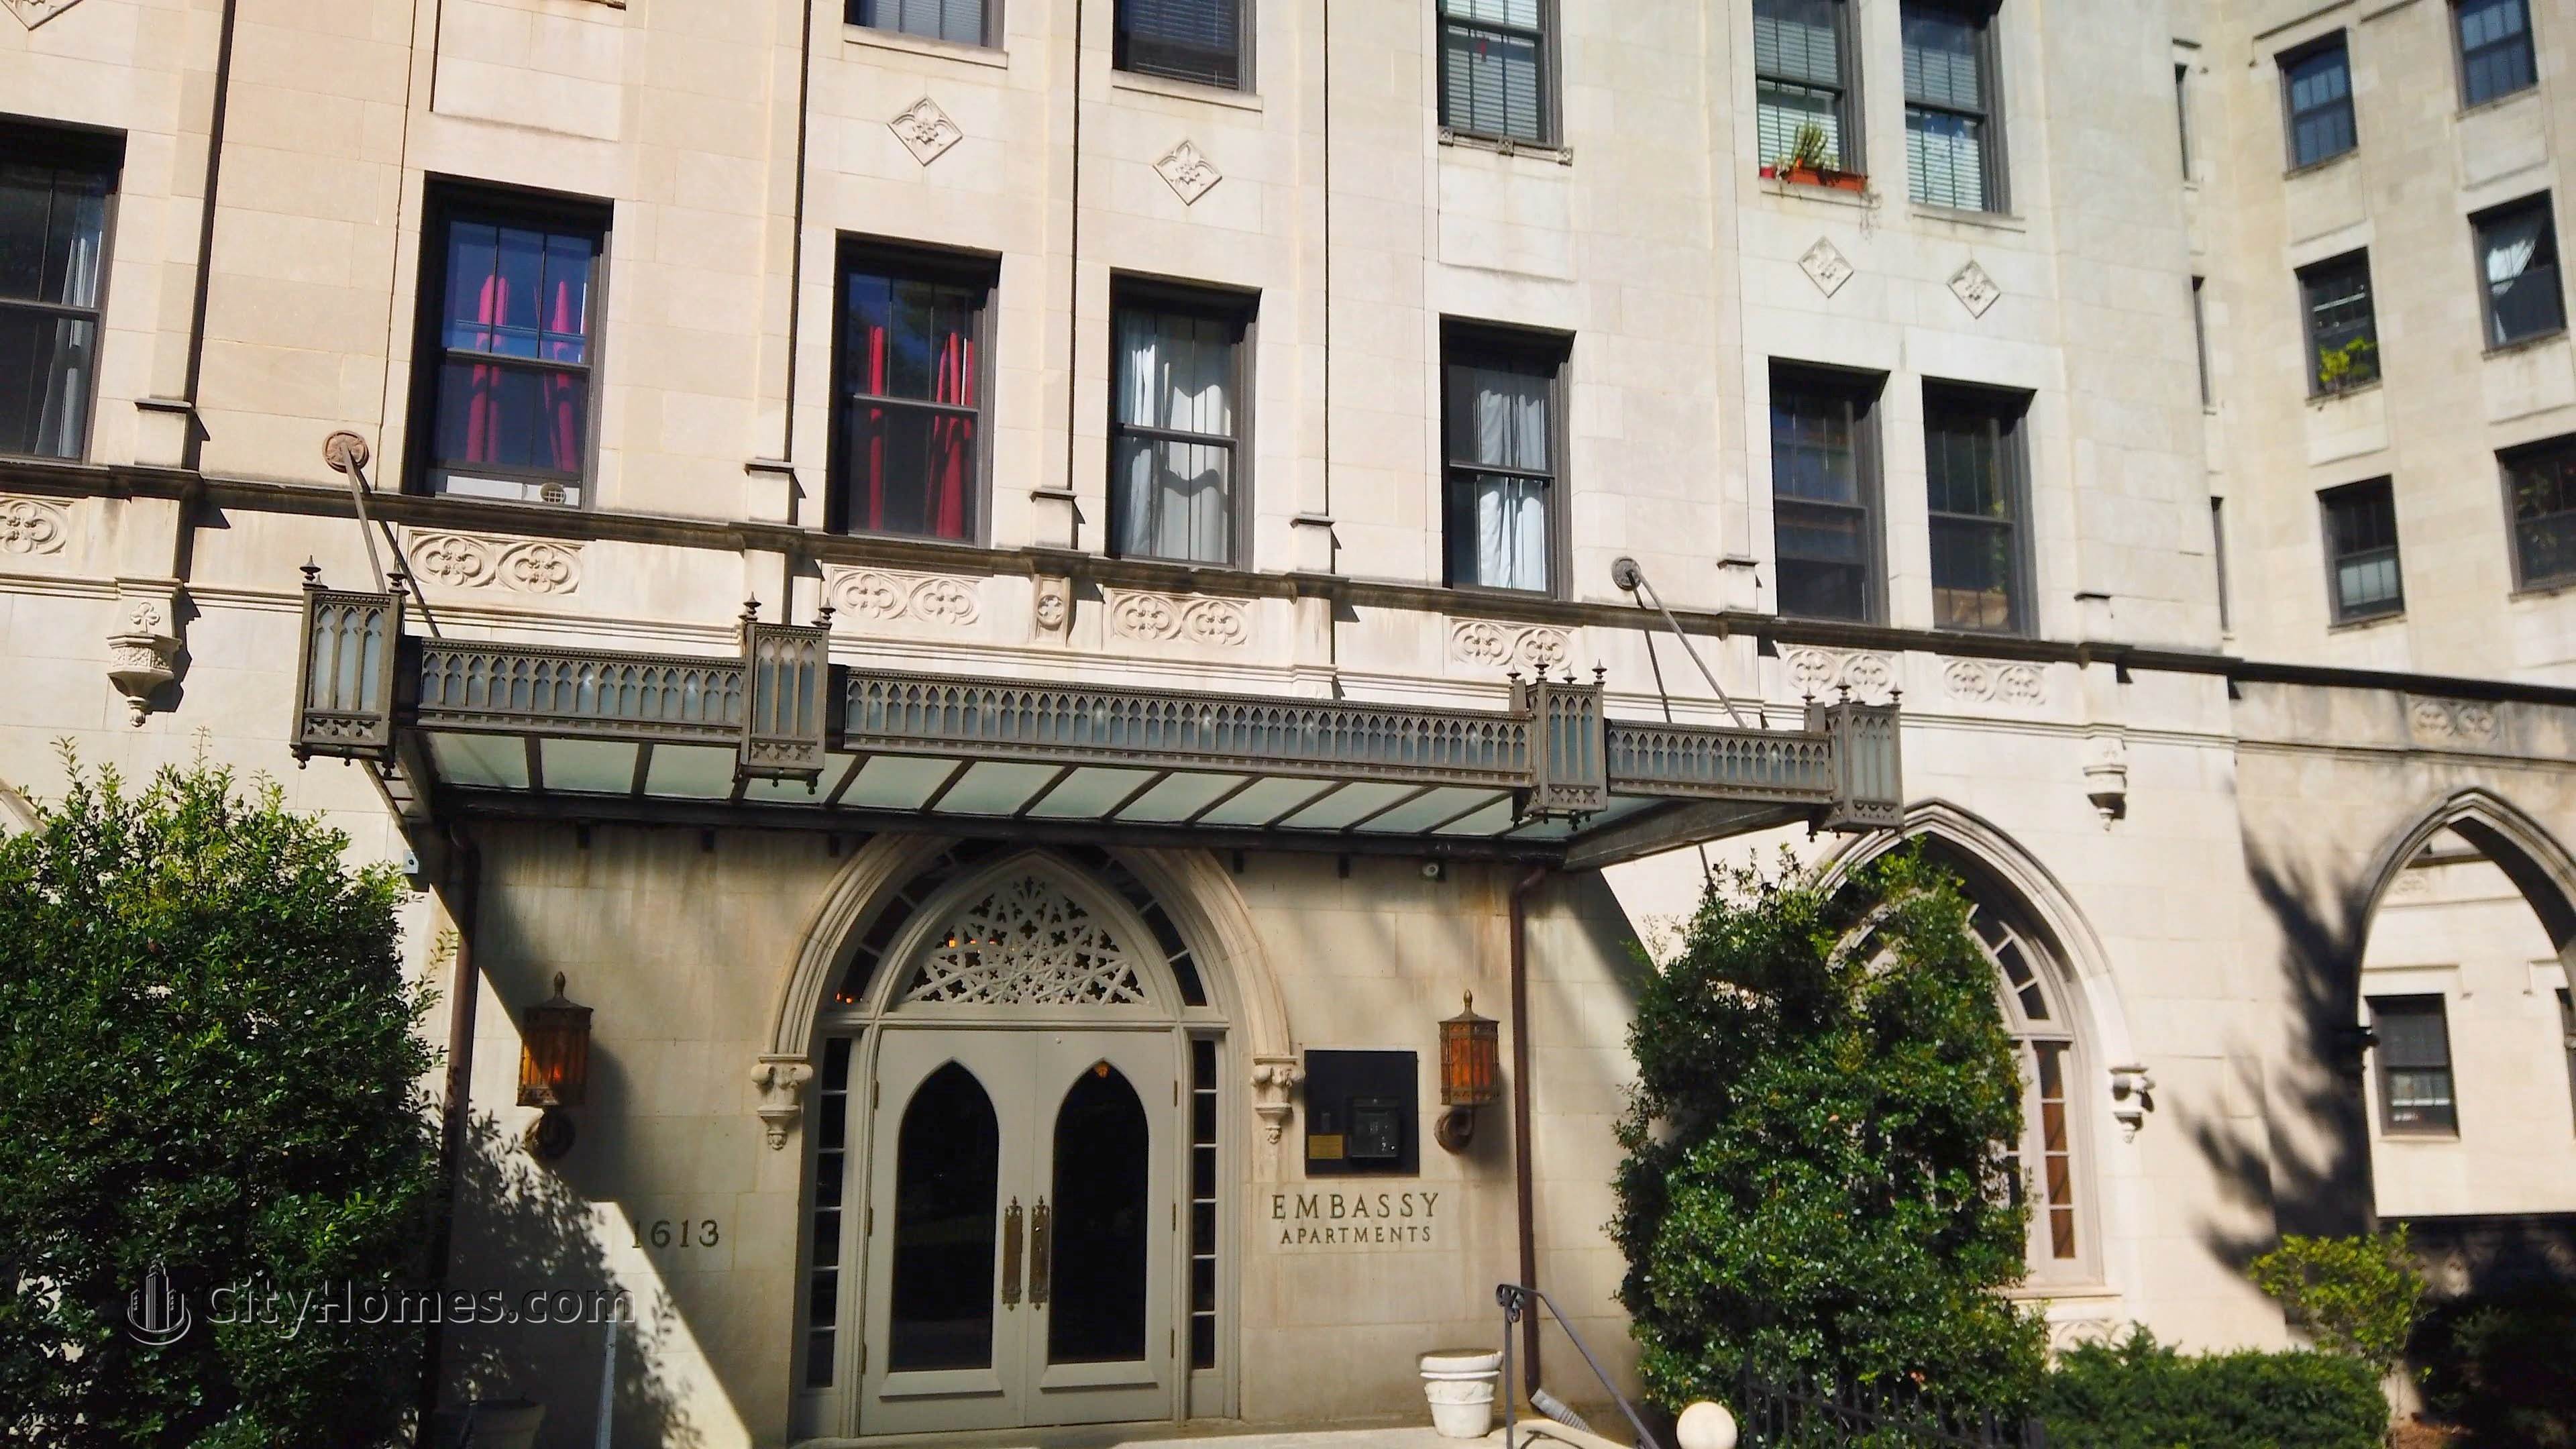 The Embassy κτίριο σε 1613 Harvard St NW, Mount Pleasant, Washington, DC 20009